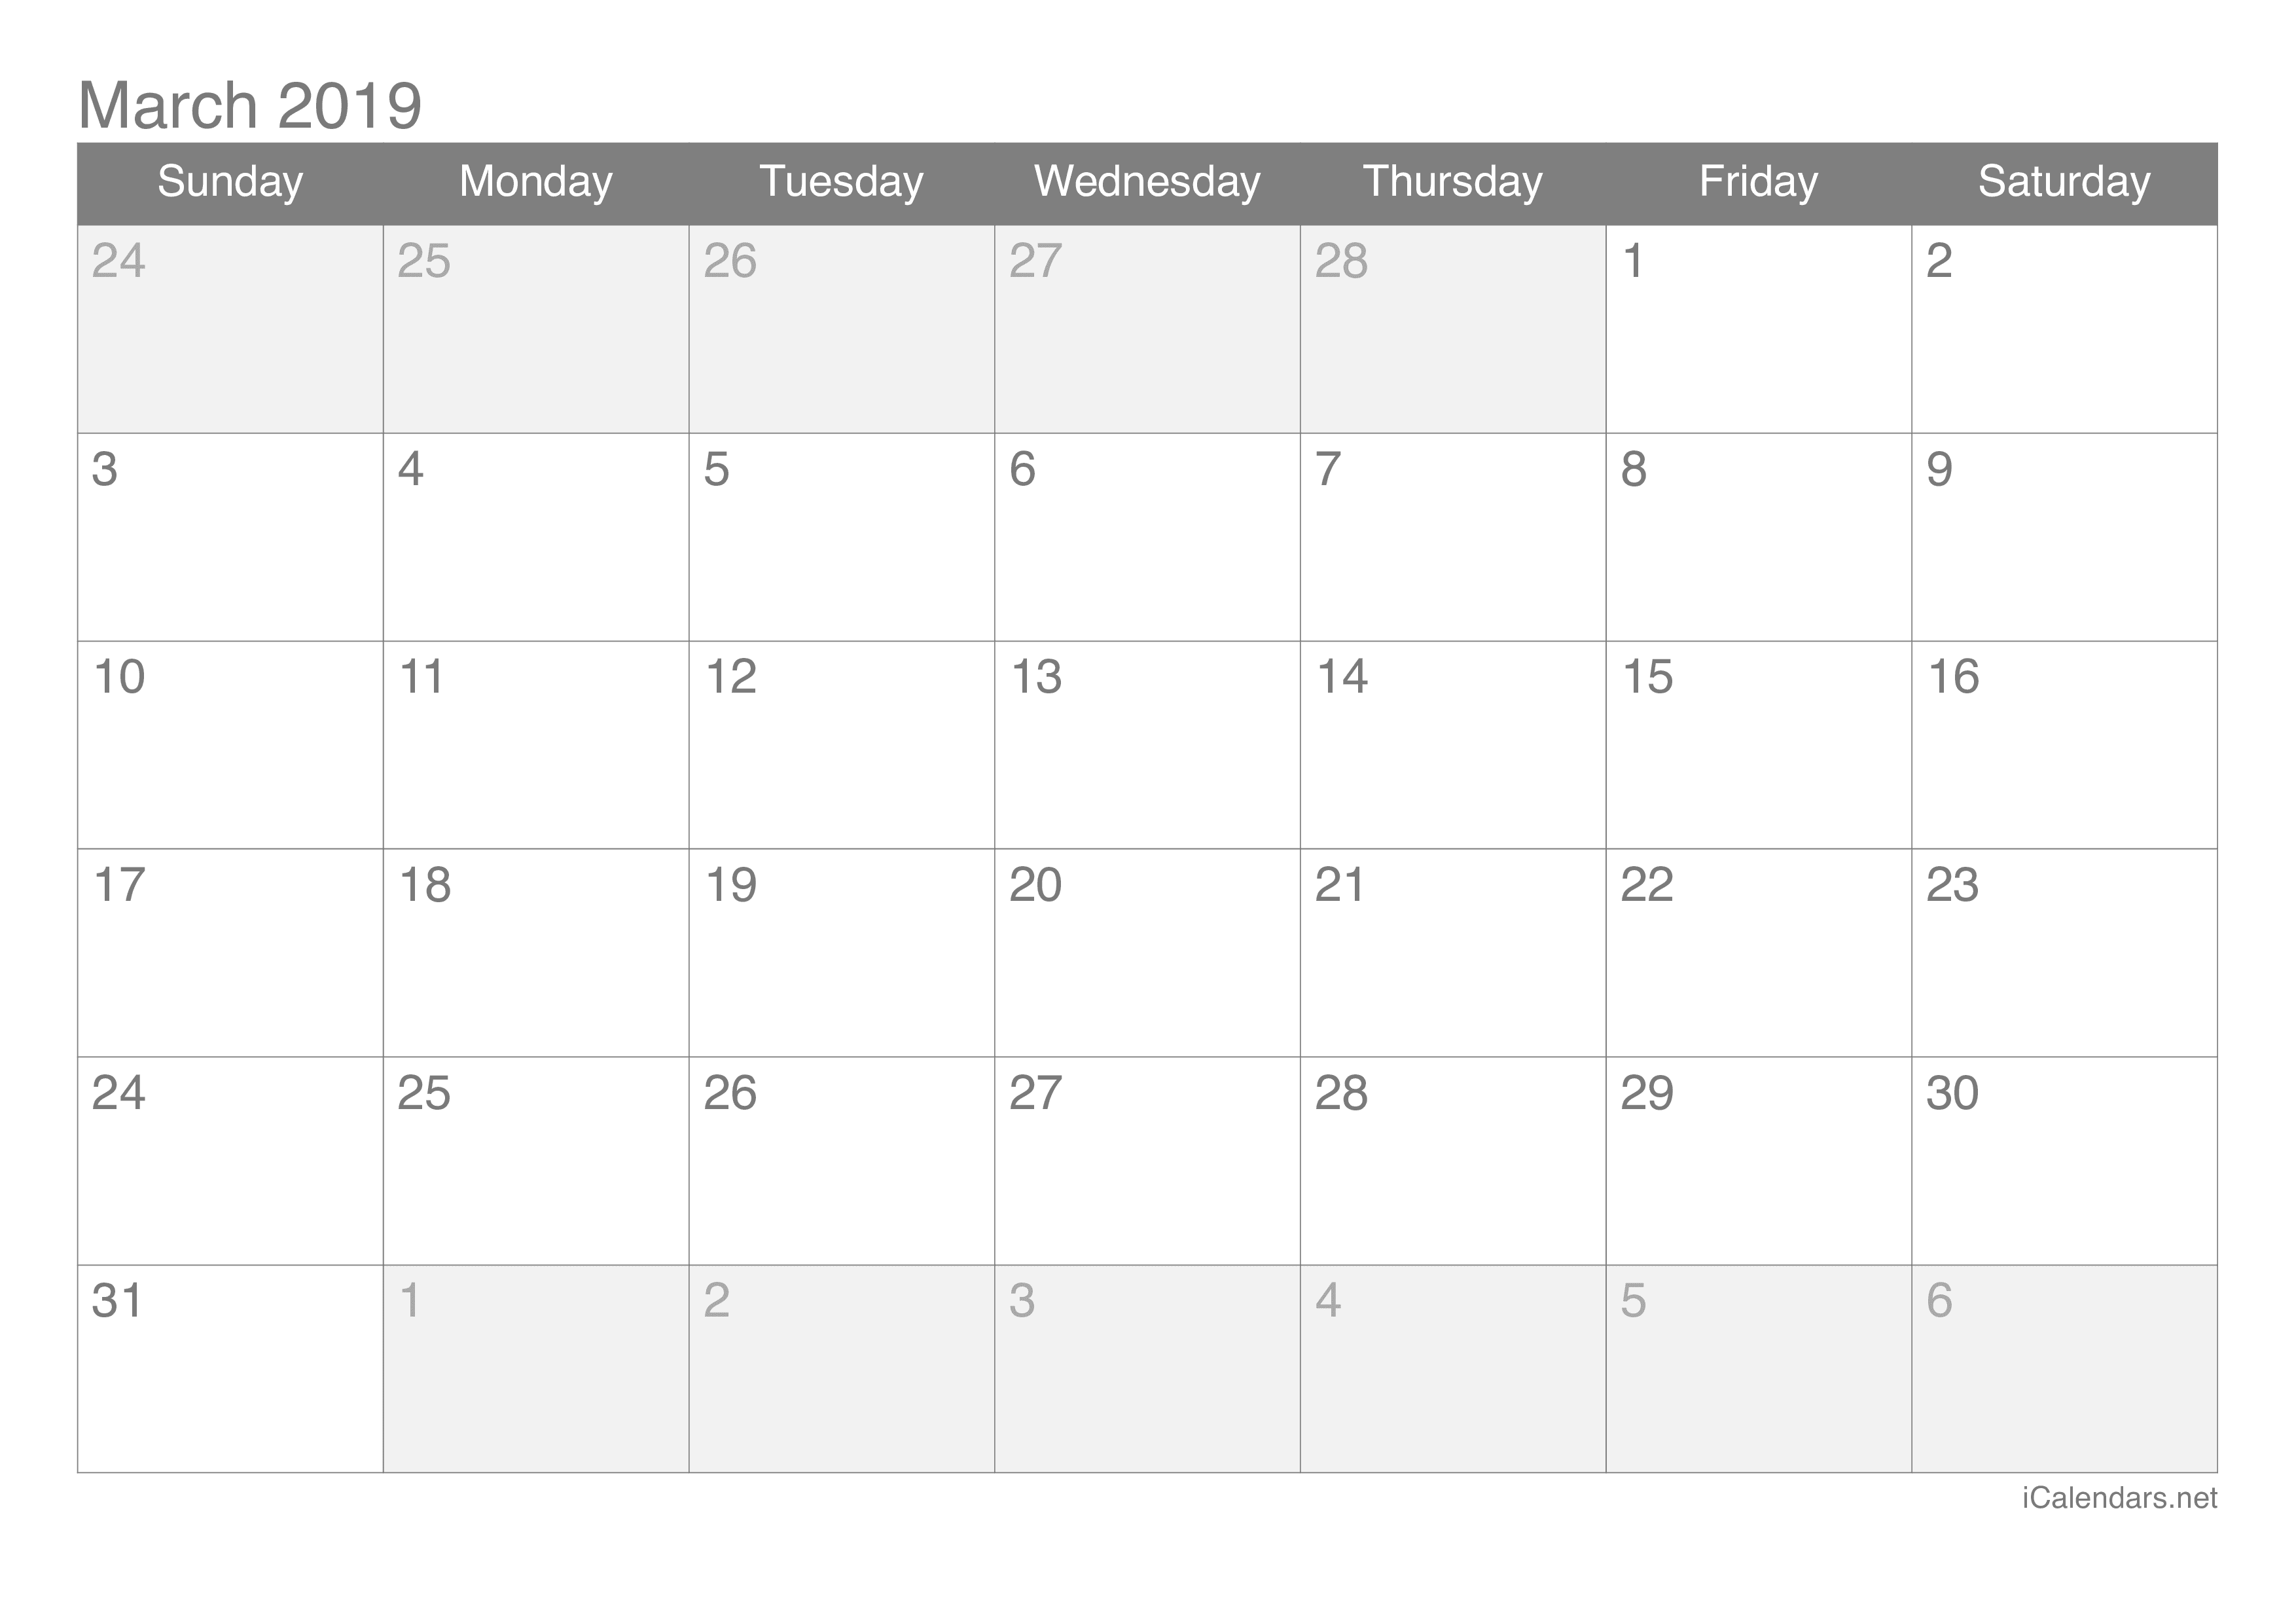 March 2019 Printable Calendar icalendars net